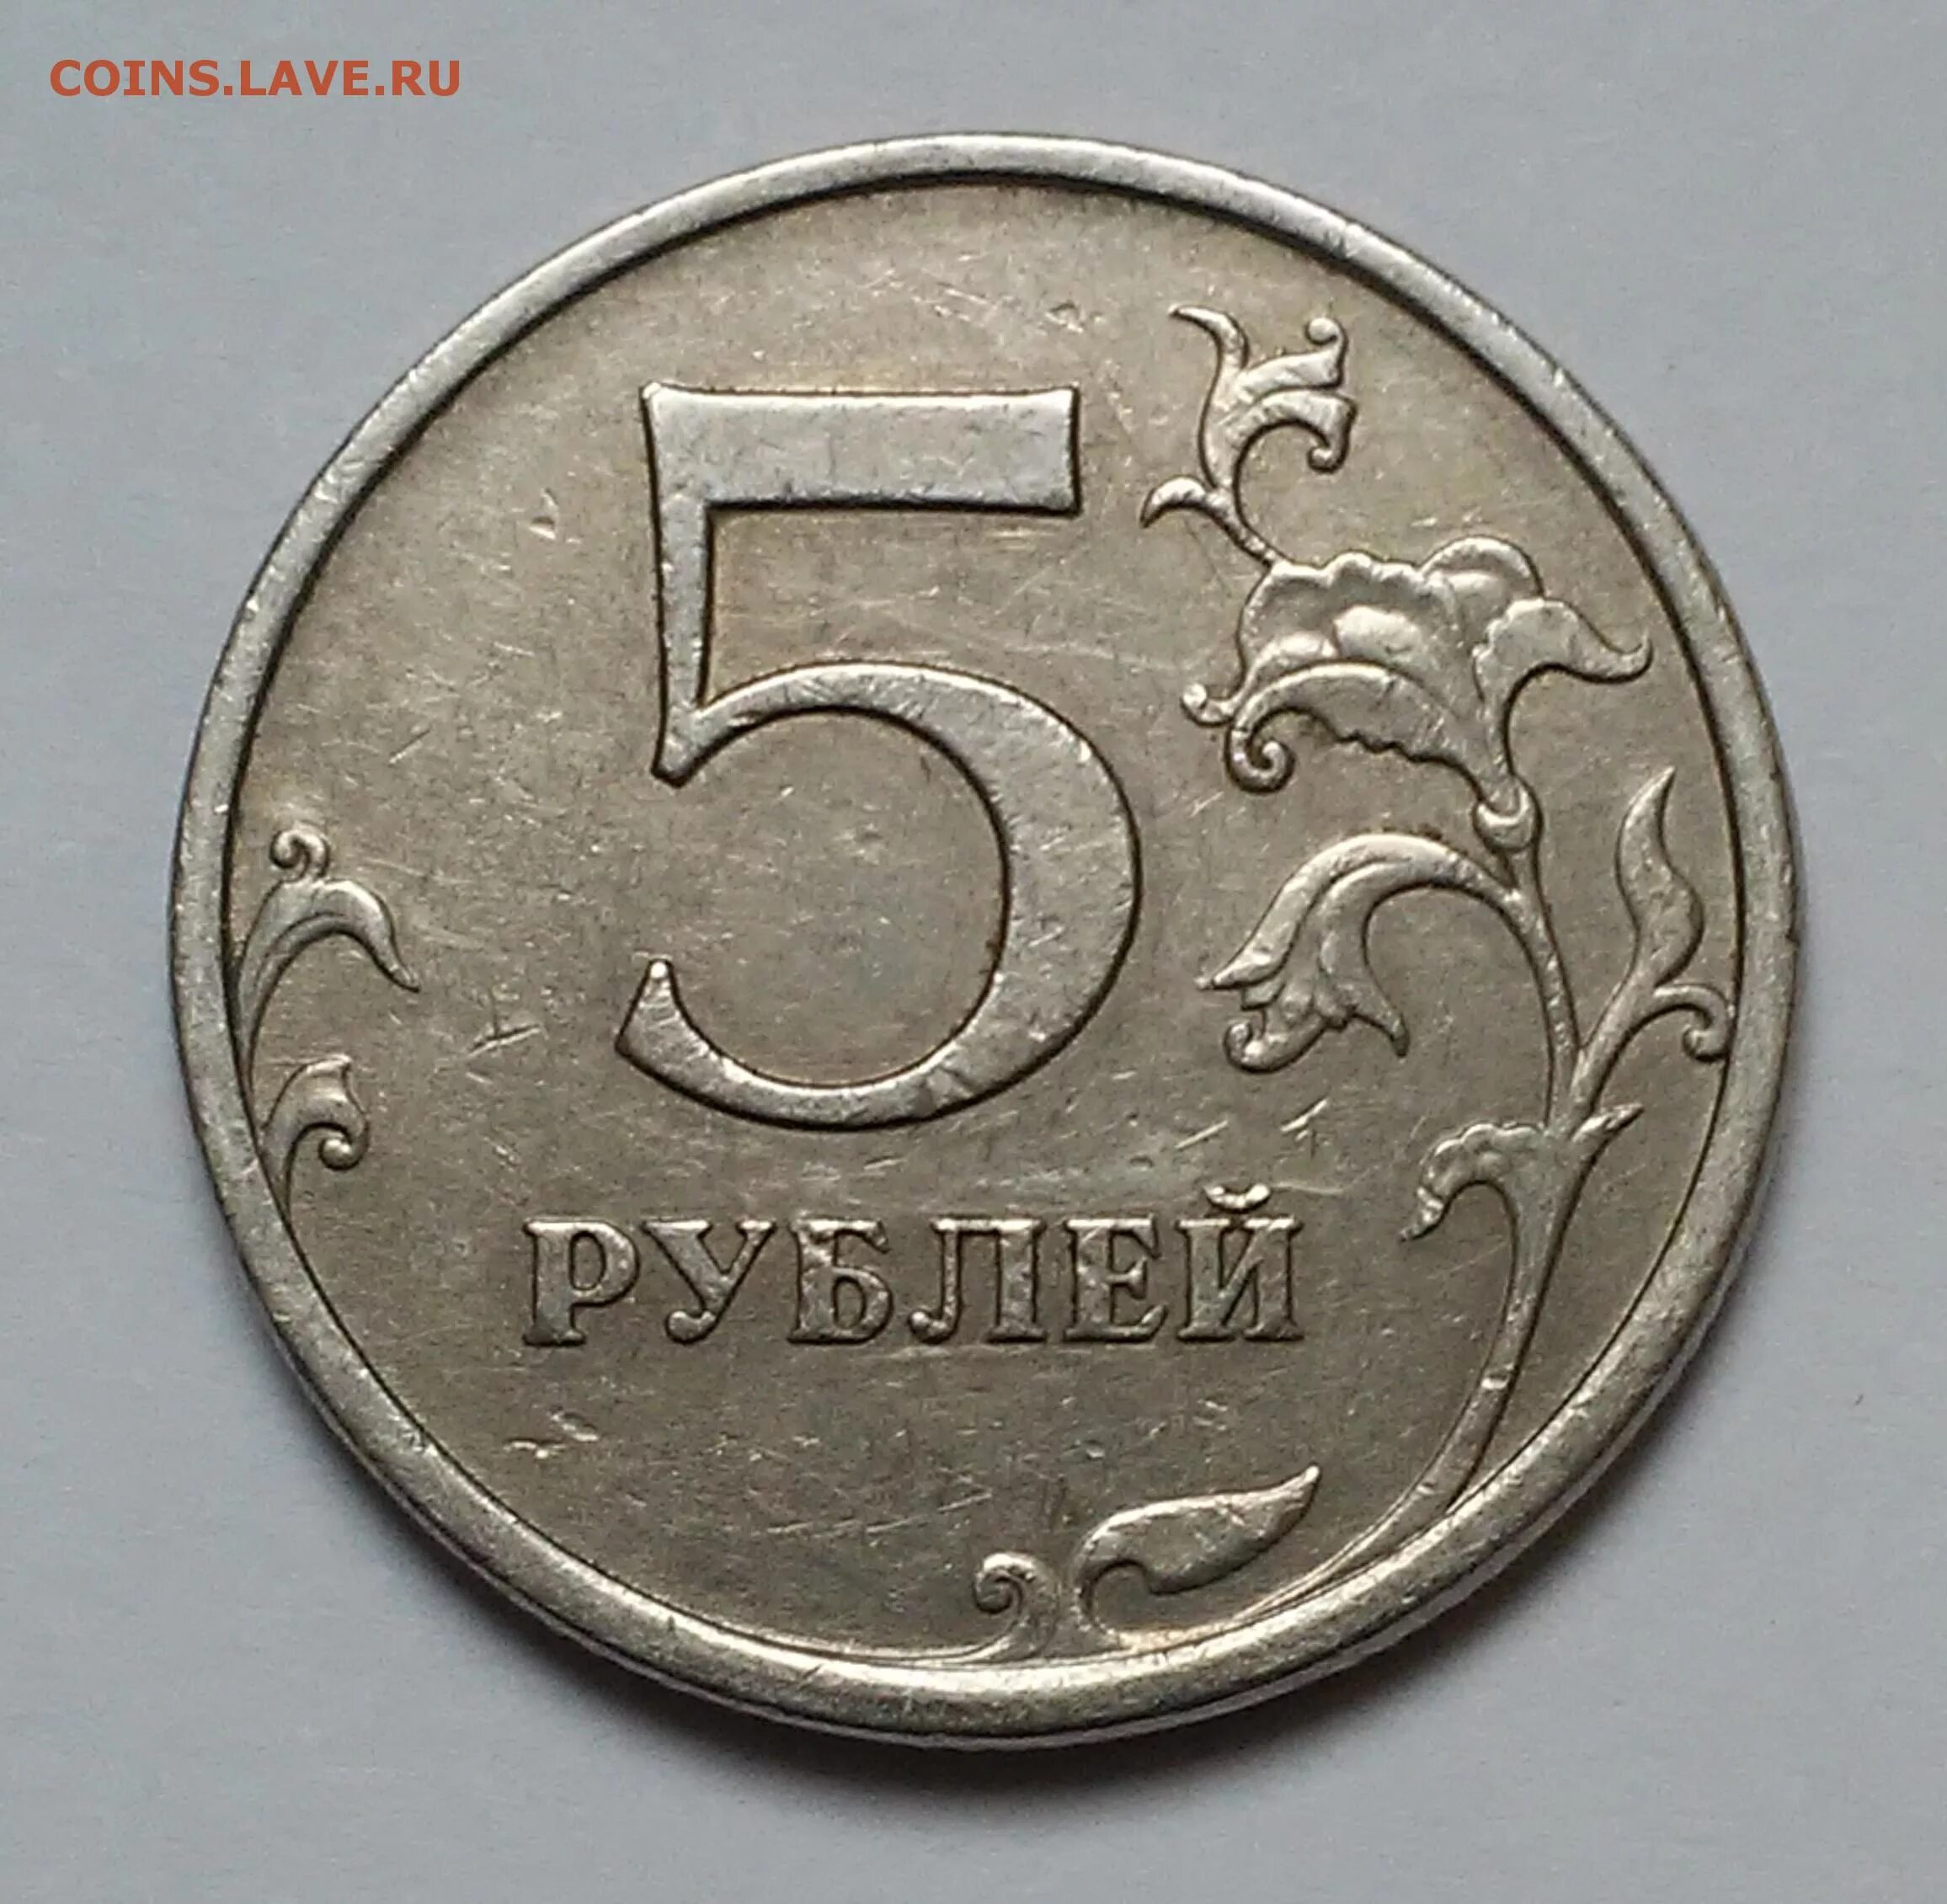 5 рублей 18 года. Монета 5 рублей 2003 года. Есть 5 рублей. Пять и десять рублей 1997 года.